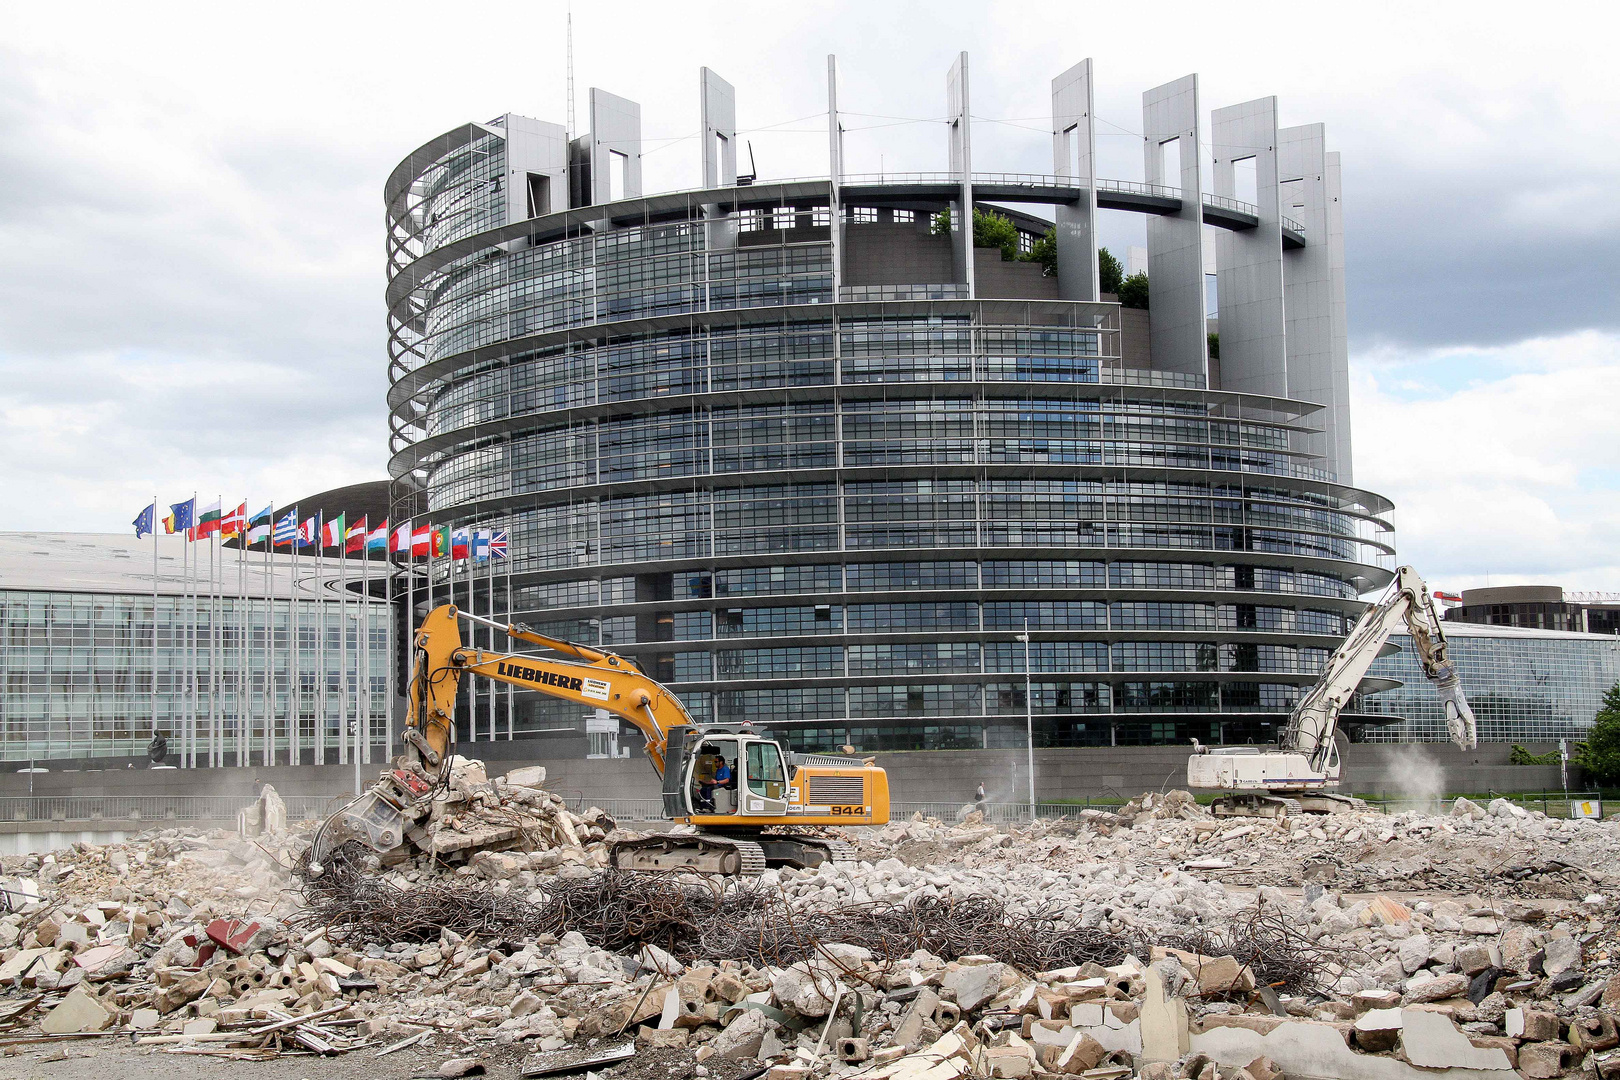 ABRISS EURO-Parlament in Strassburg ?! EUROEXIT -Juli2015